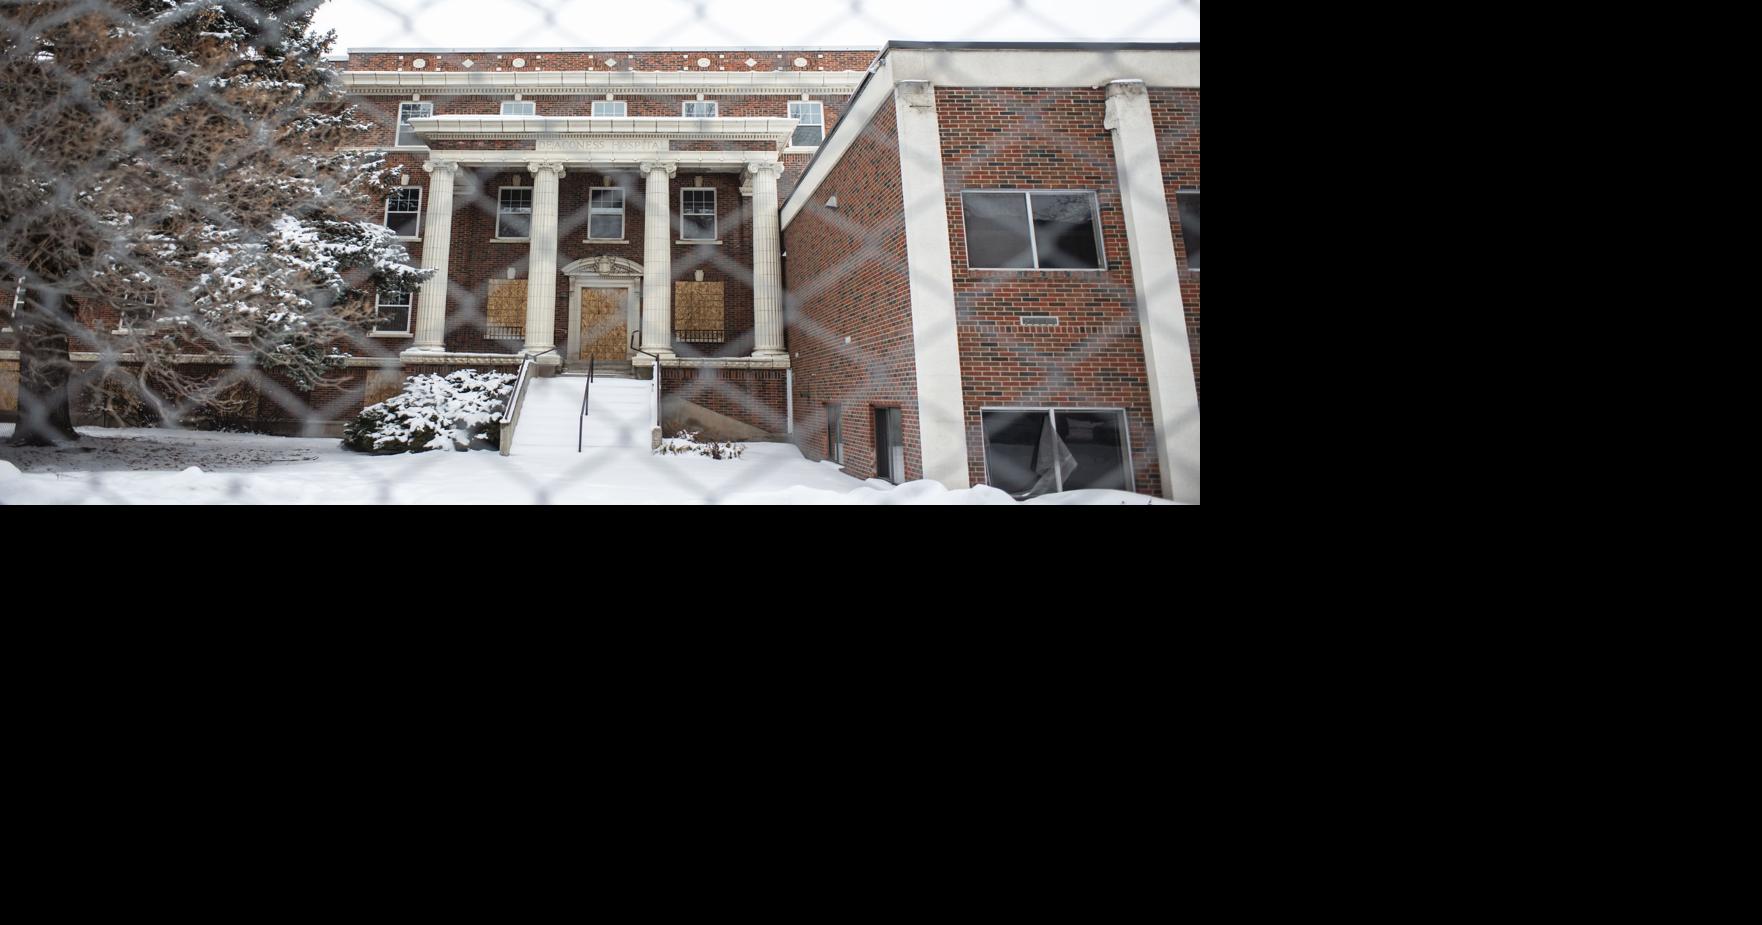 Proposed demolition of old Bozeman Deaconess Hospital raises ...